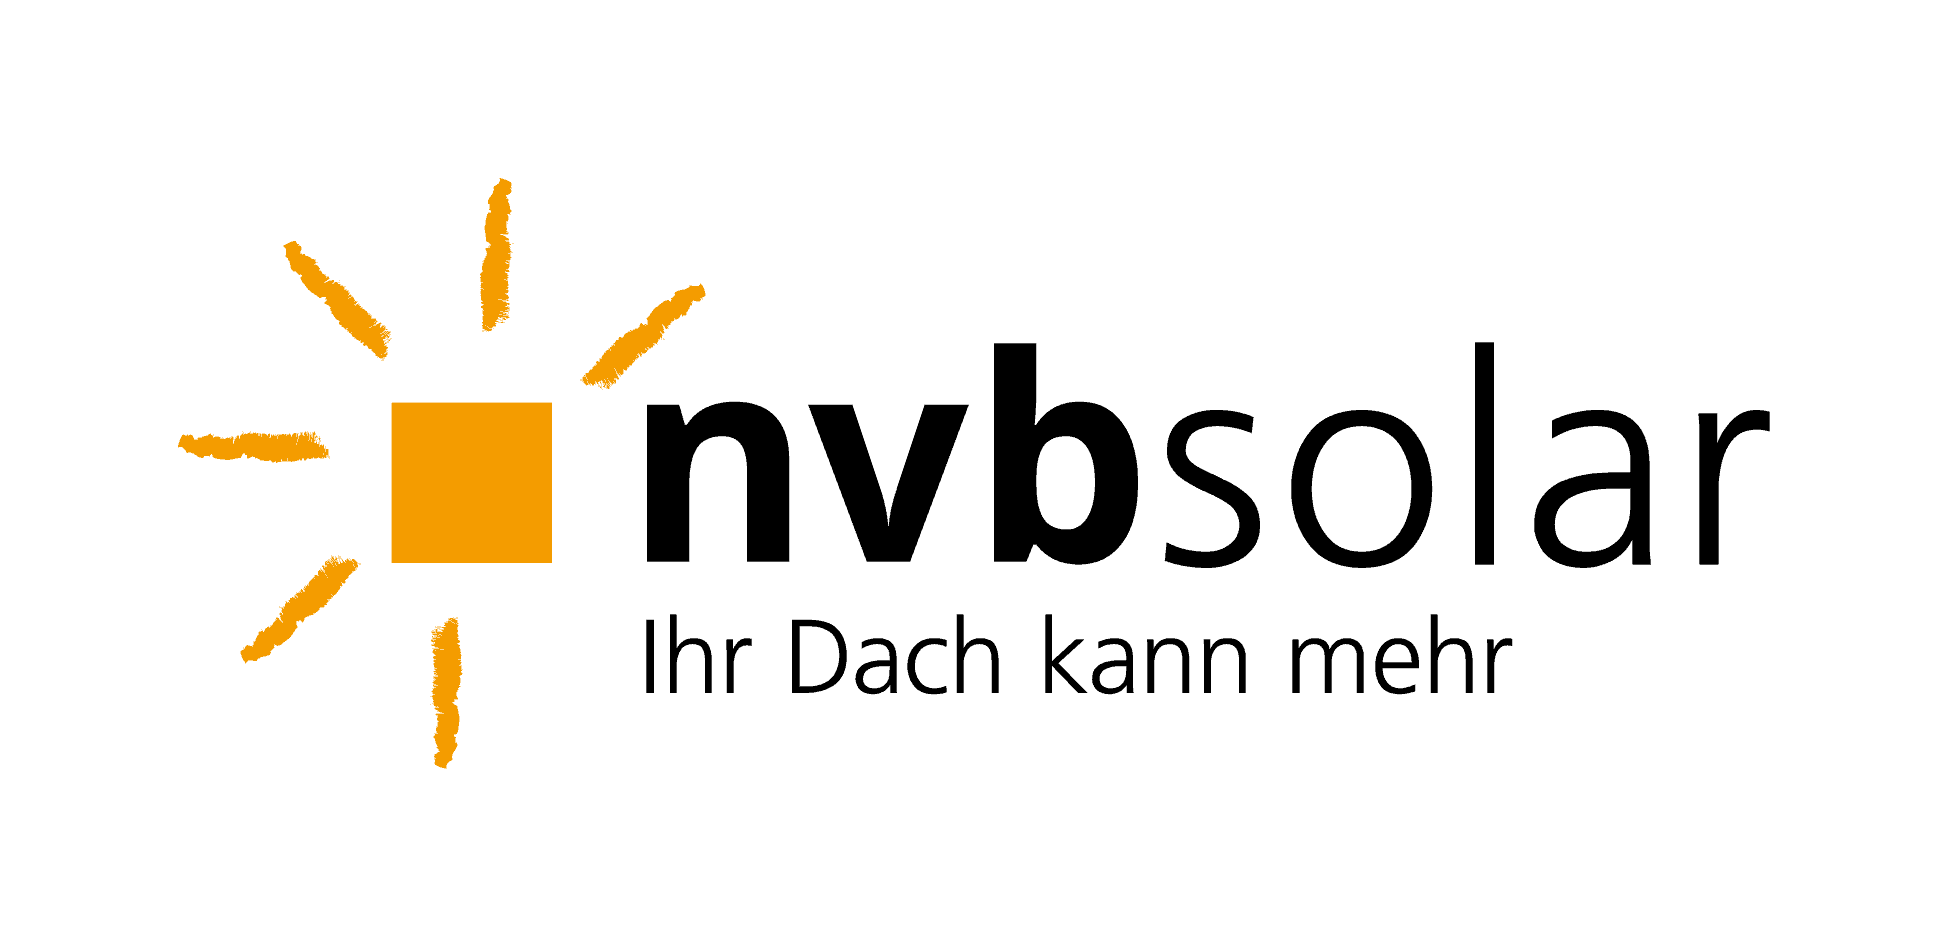 Logo Nvbsolar.png